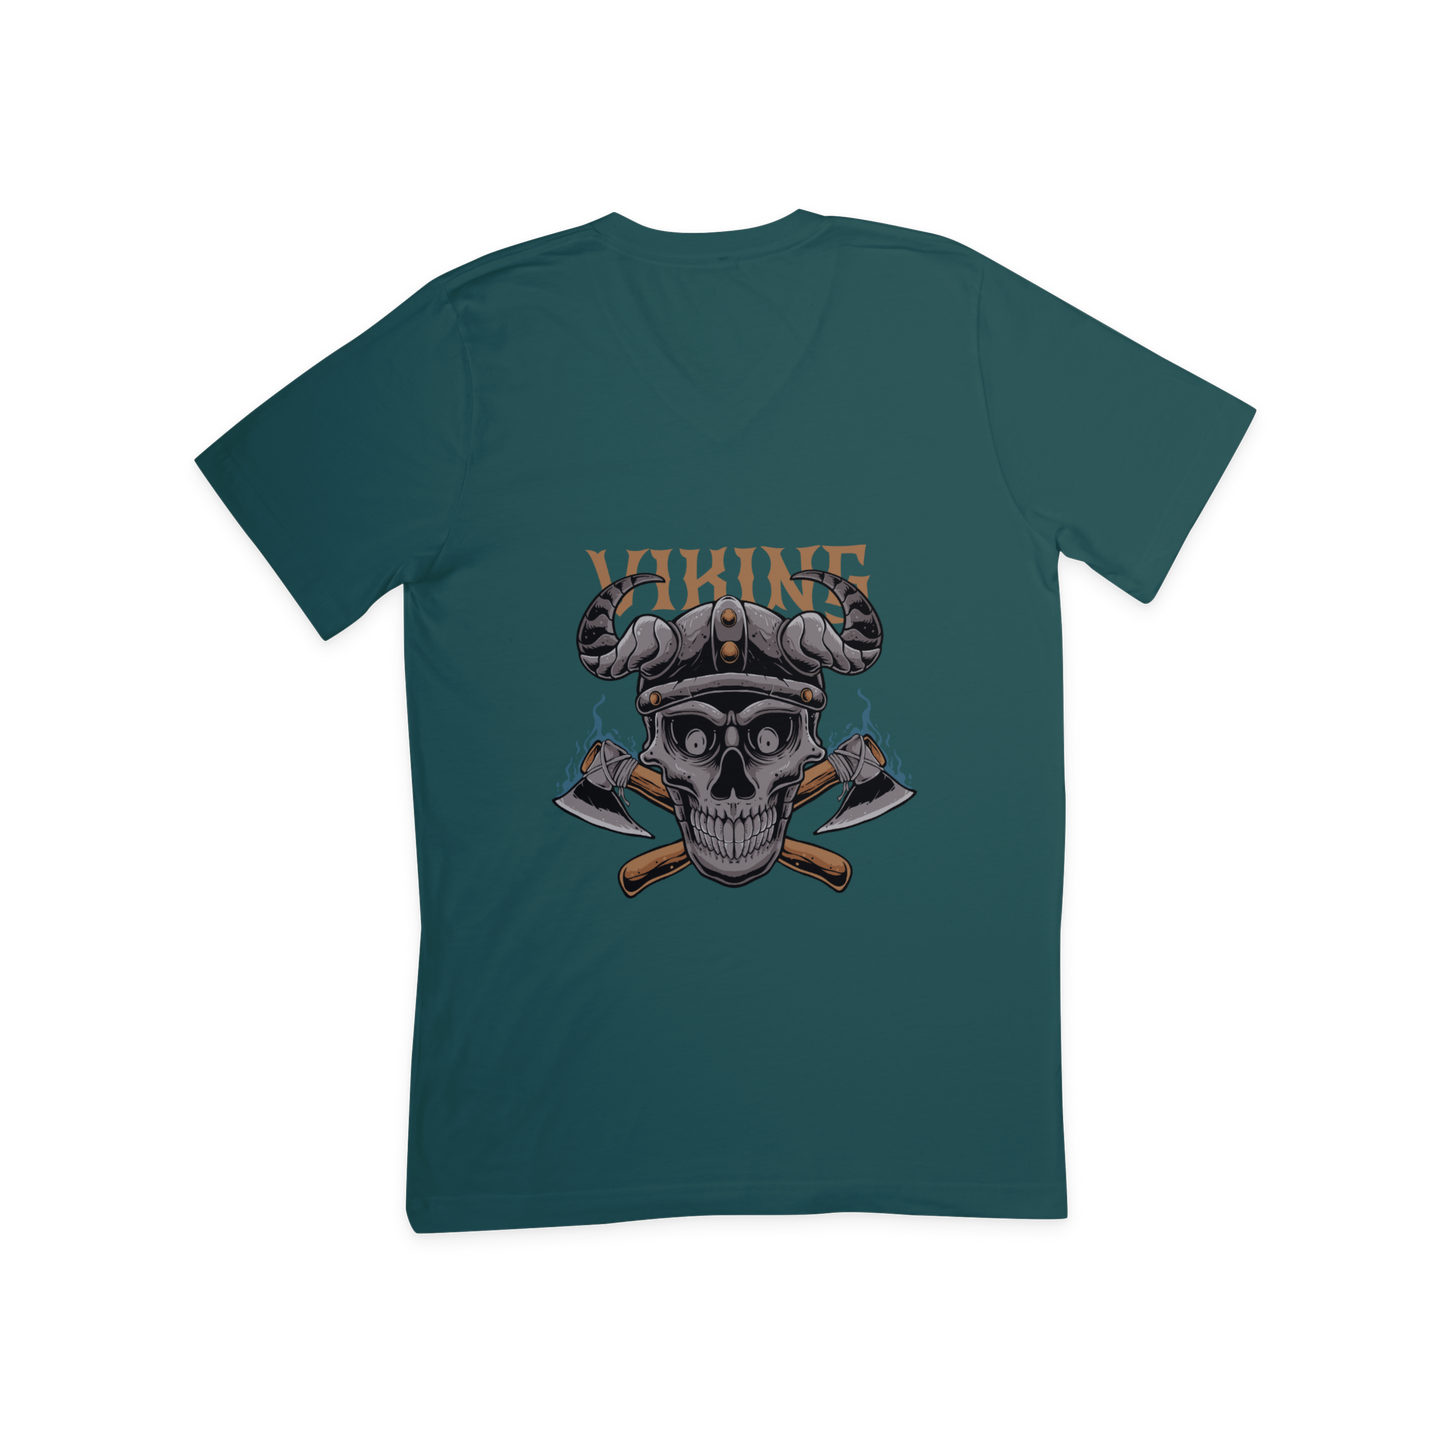 Vikine Design T-shirt